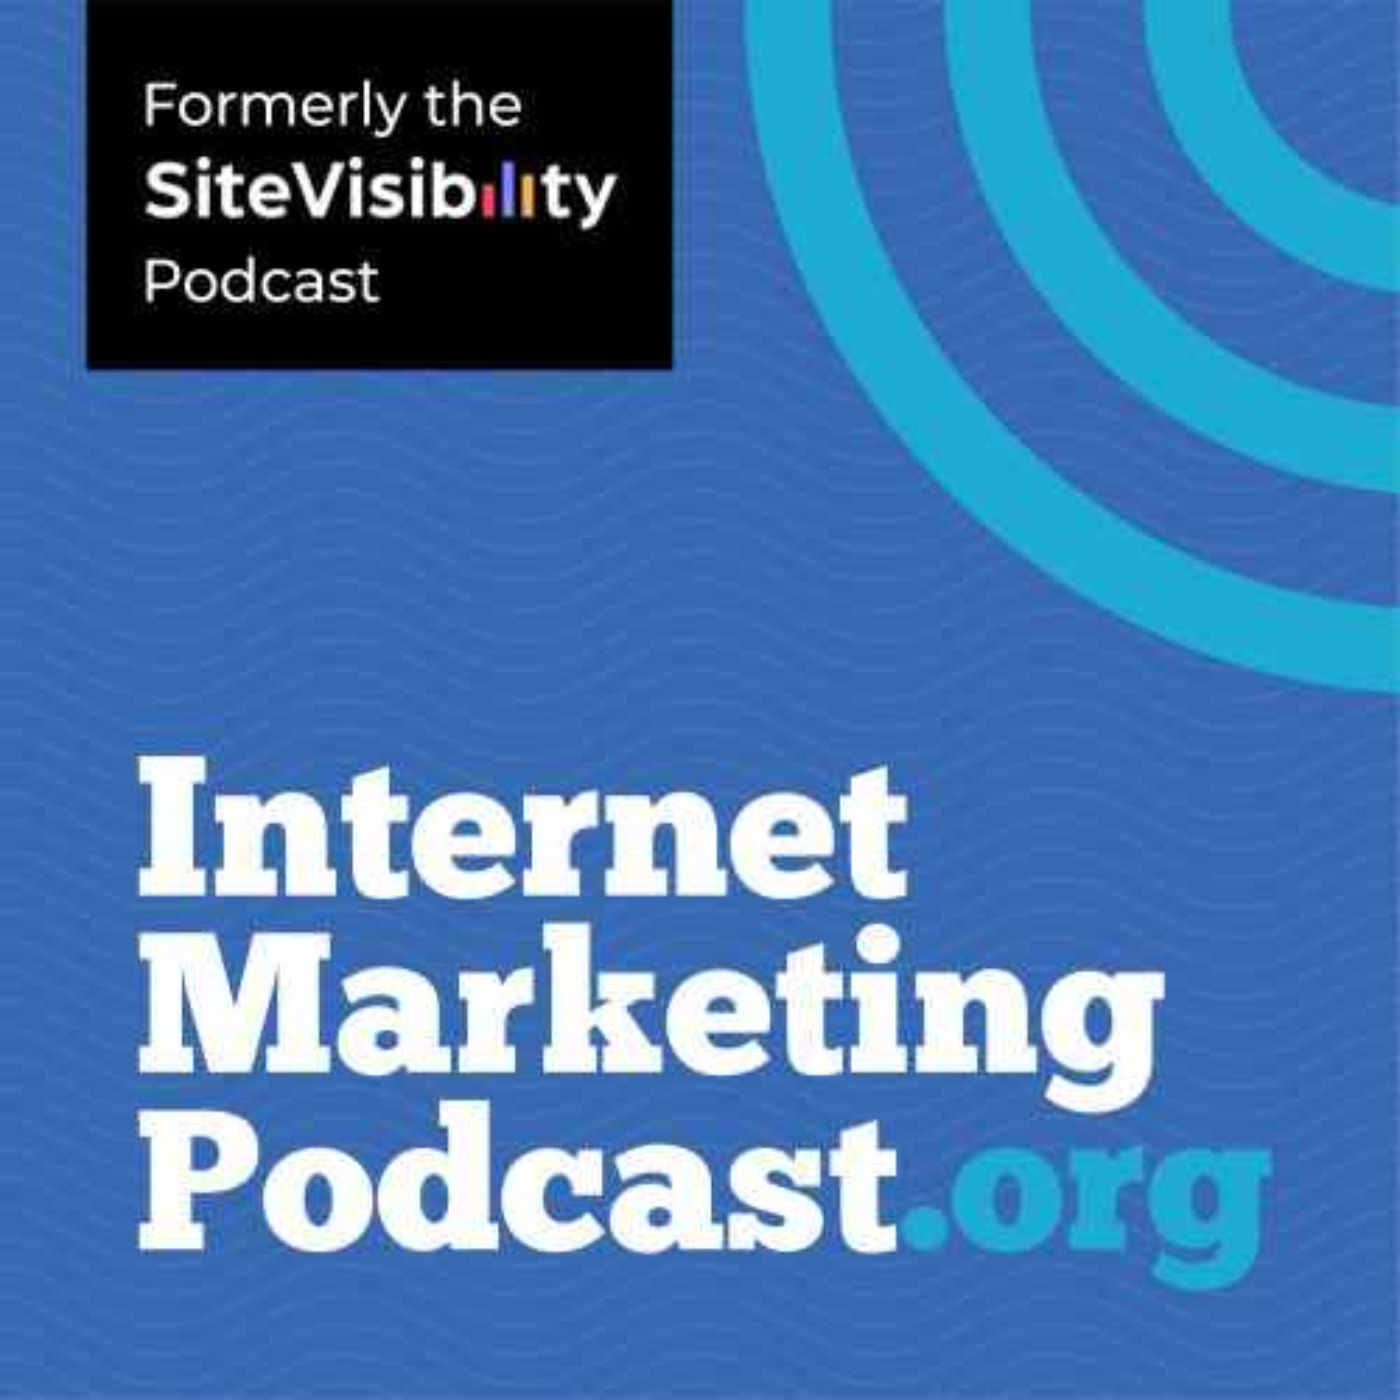 The Internet Marketing Podcast 